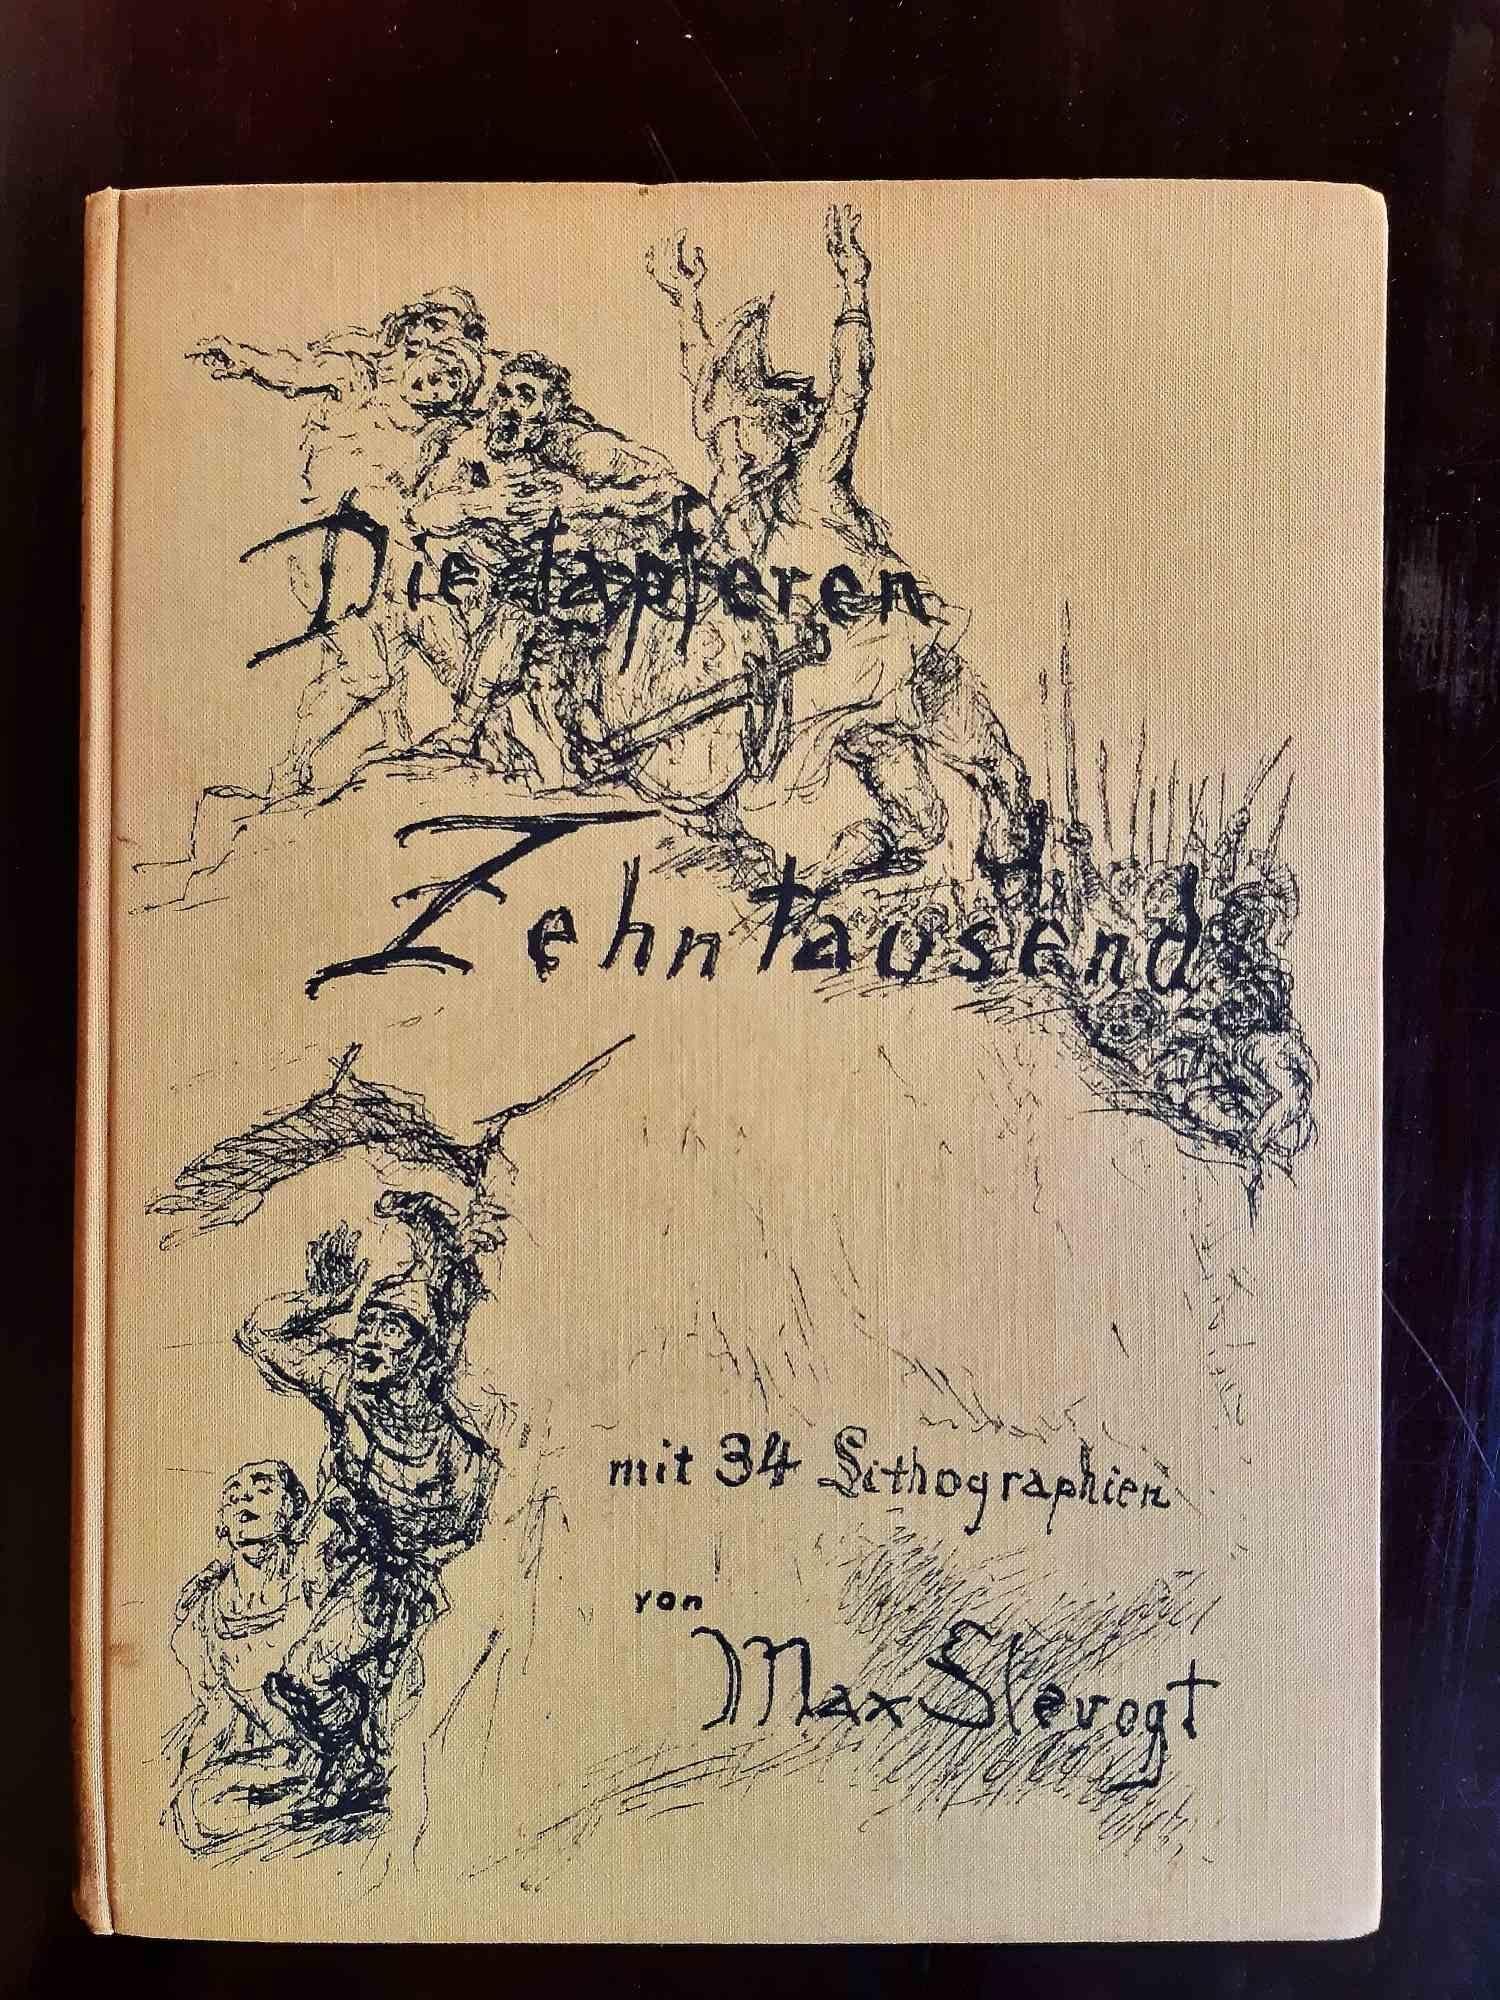 Die Tapferen Zehntausend - Original Rare Book Illustrated by Max Slevogt - 1921 For Sale 1